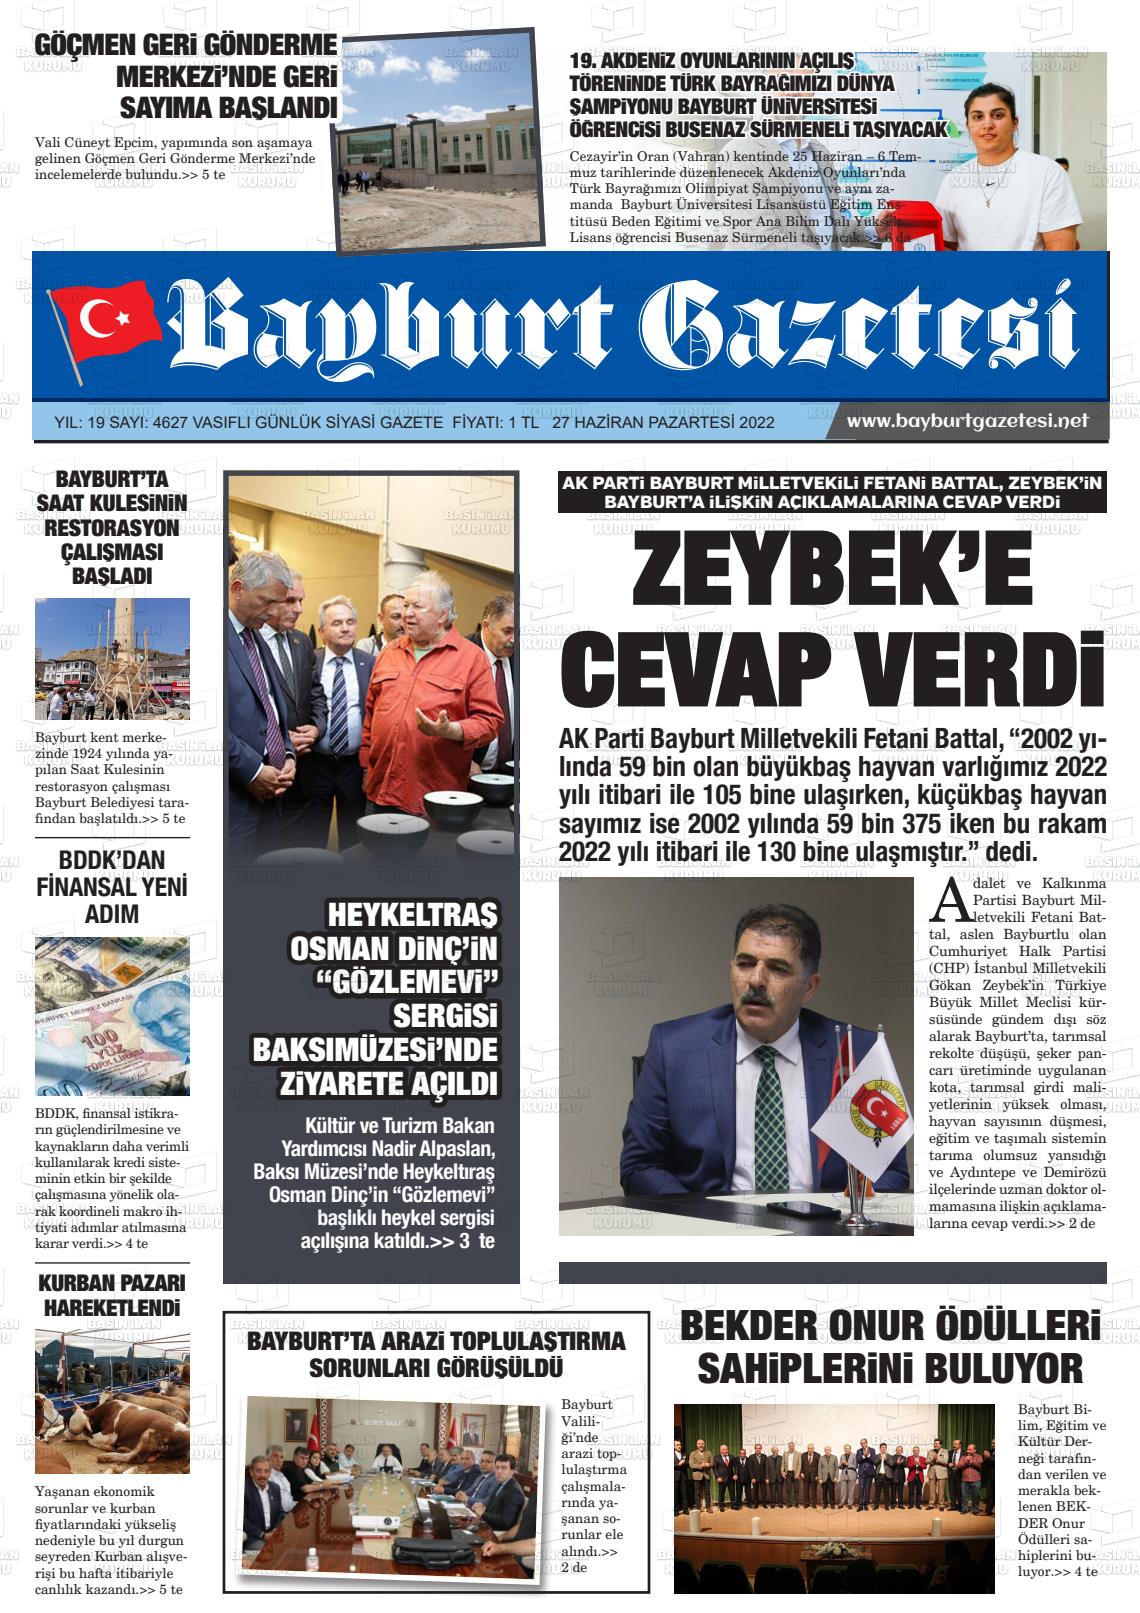 27 Haziran 2022 Bayburt Sıla Gazete Manşeti